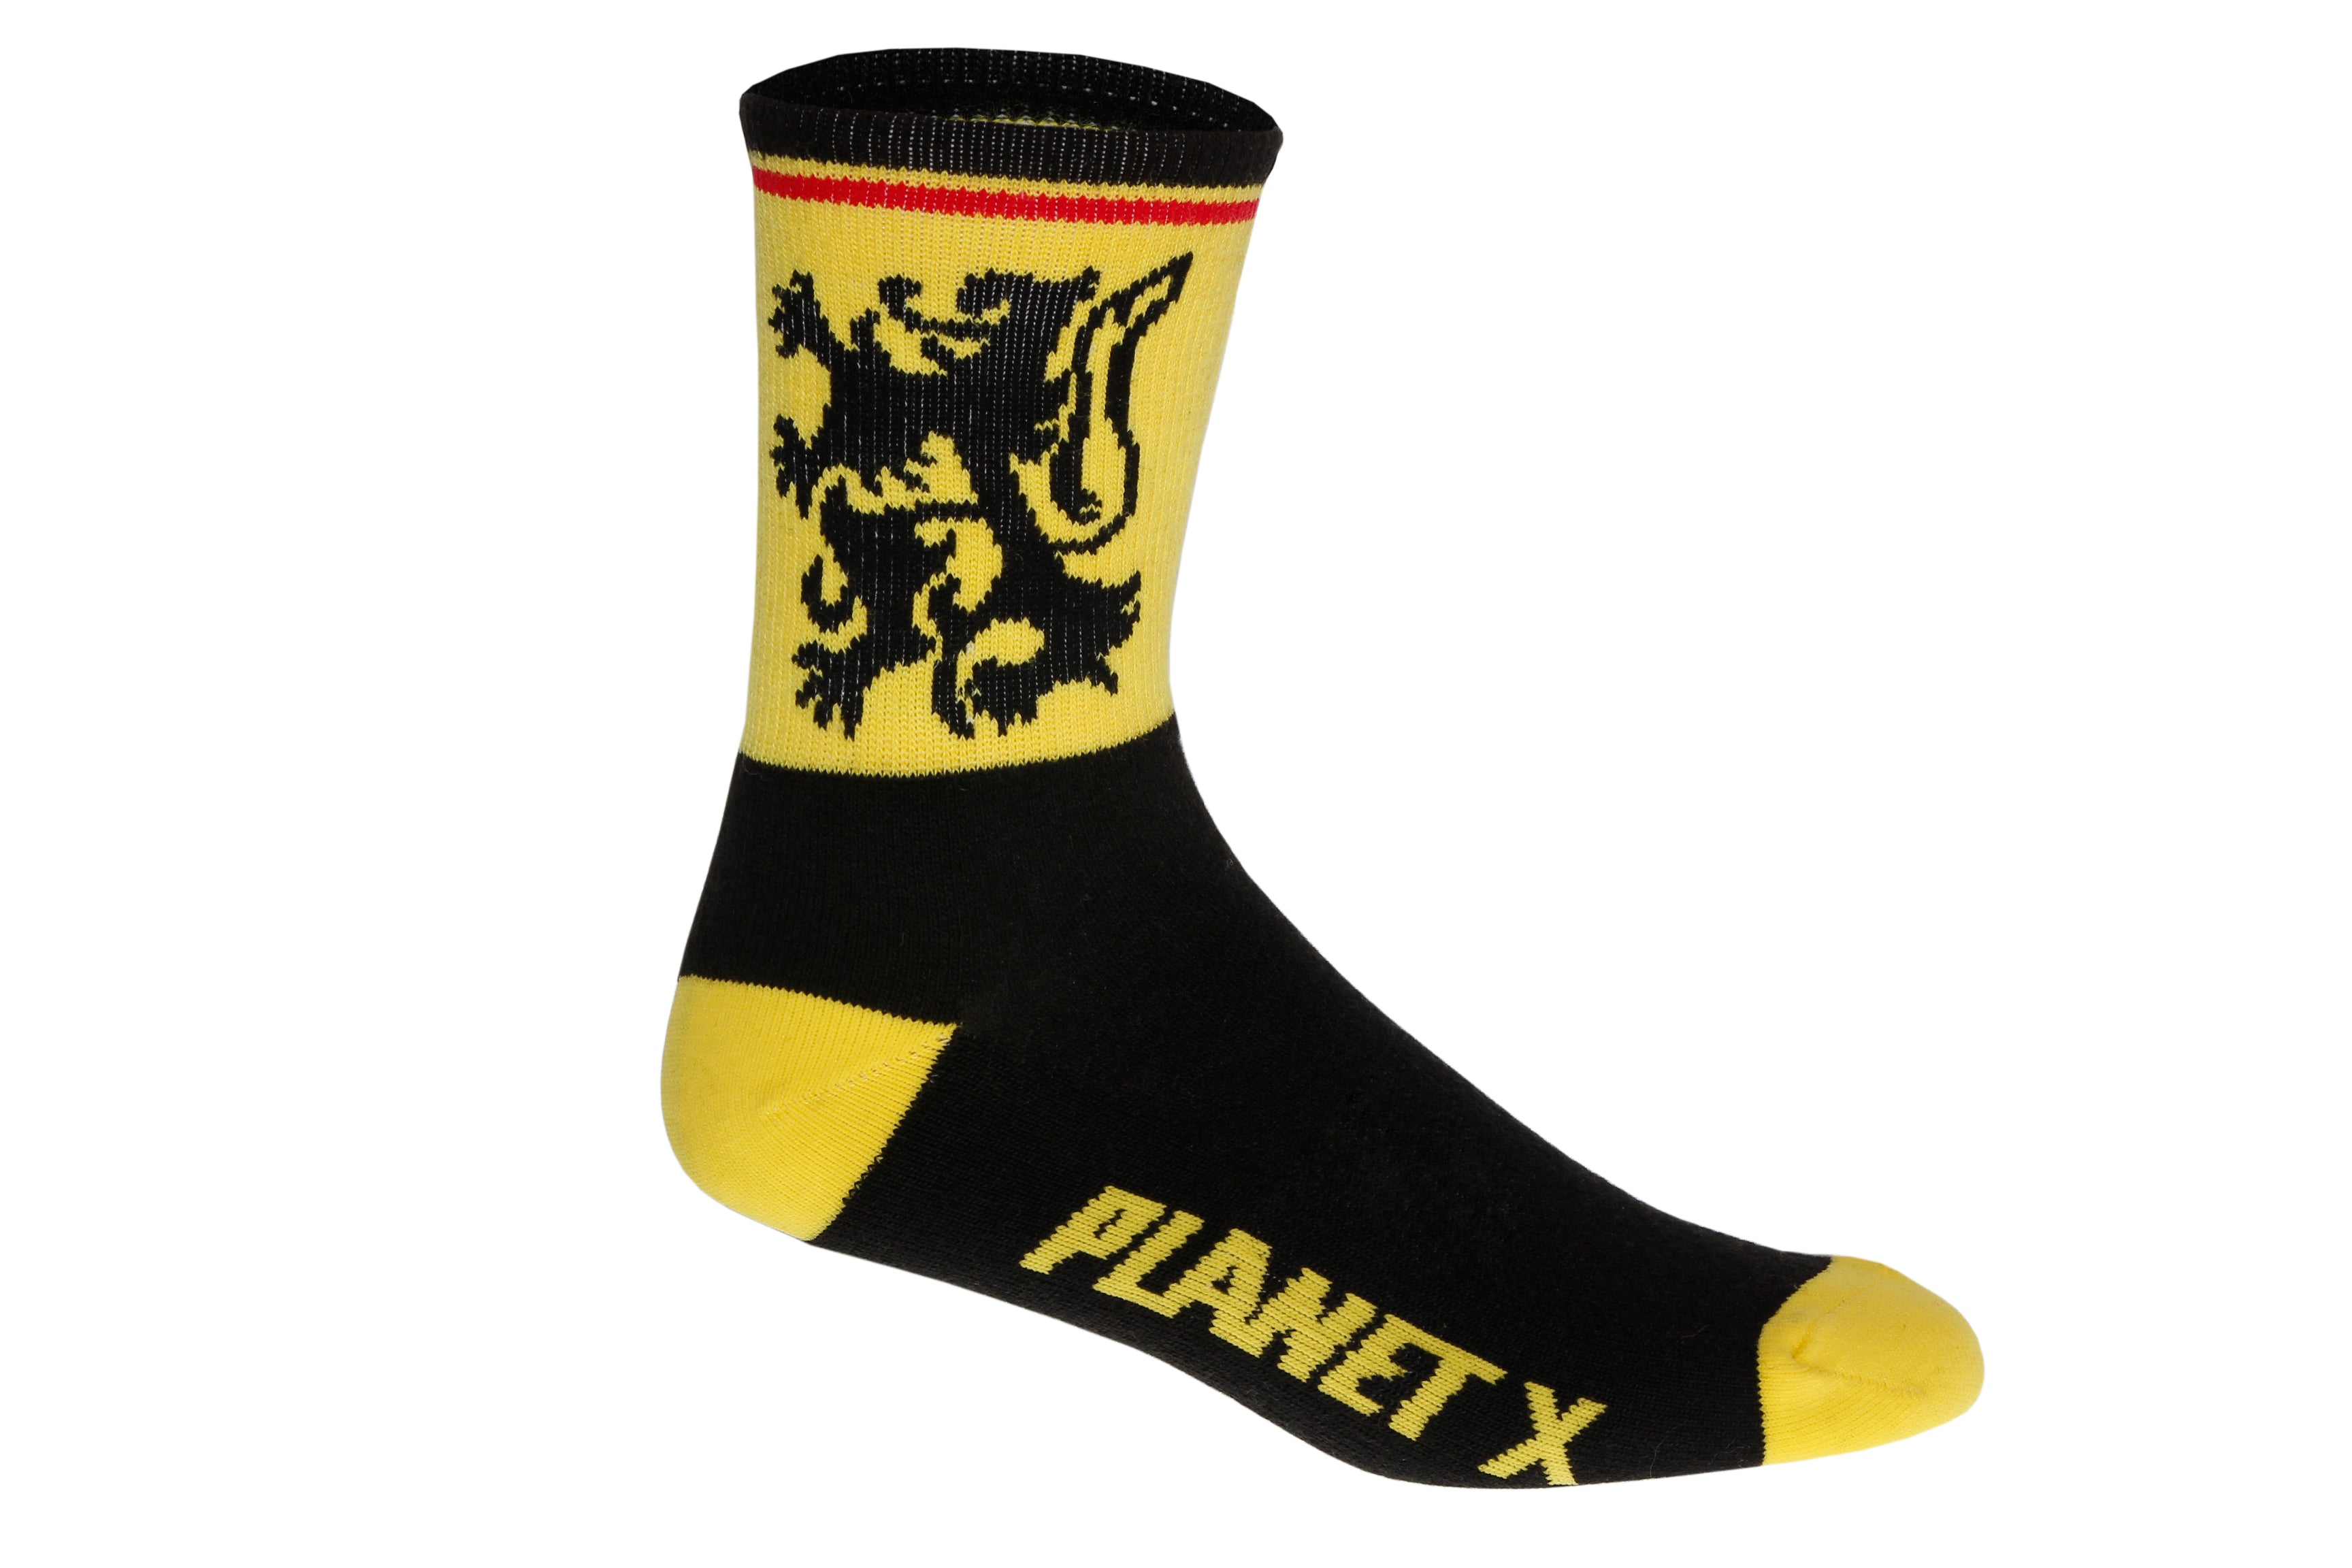 Planet X Thicky Merino Socks